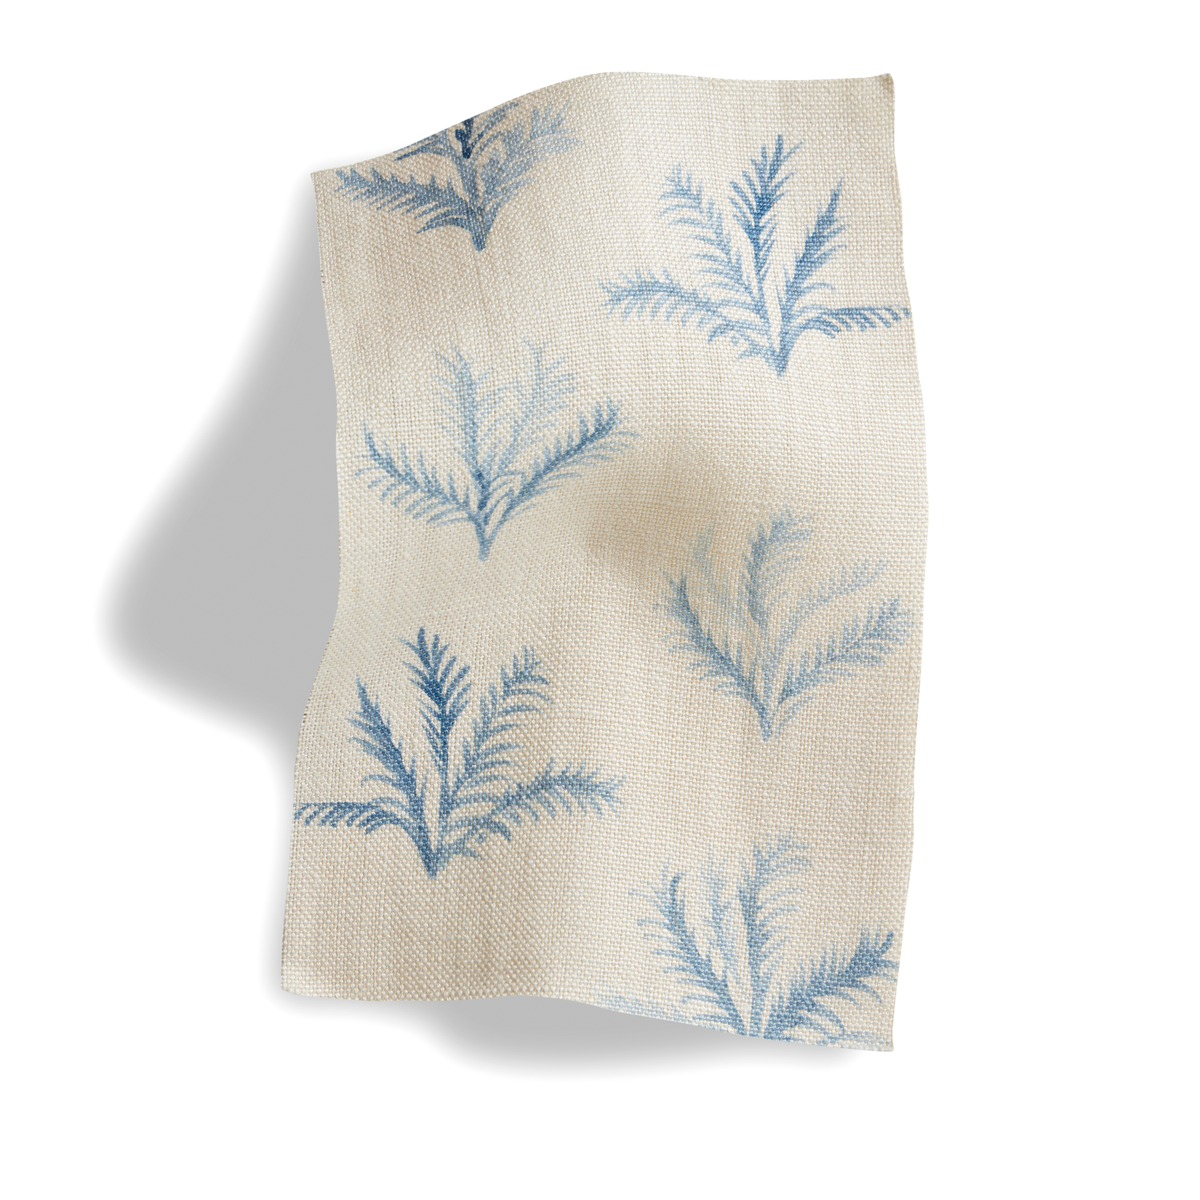 Little Palm Fabric in Light Blue